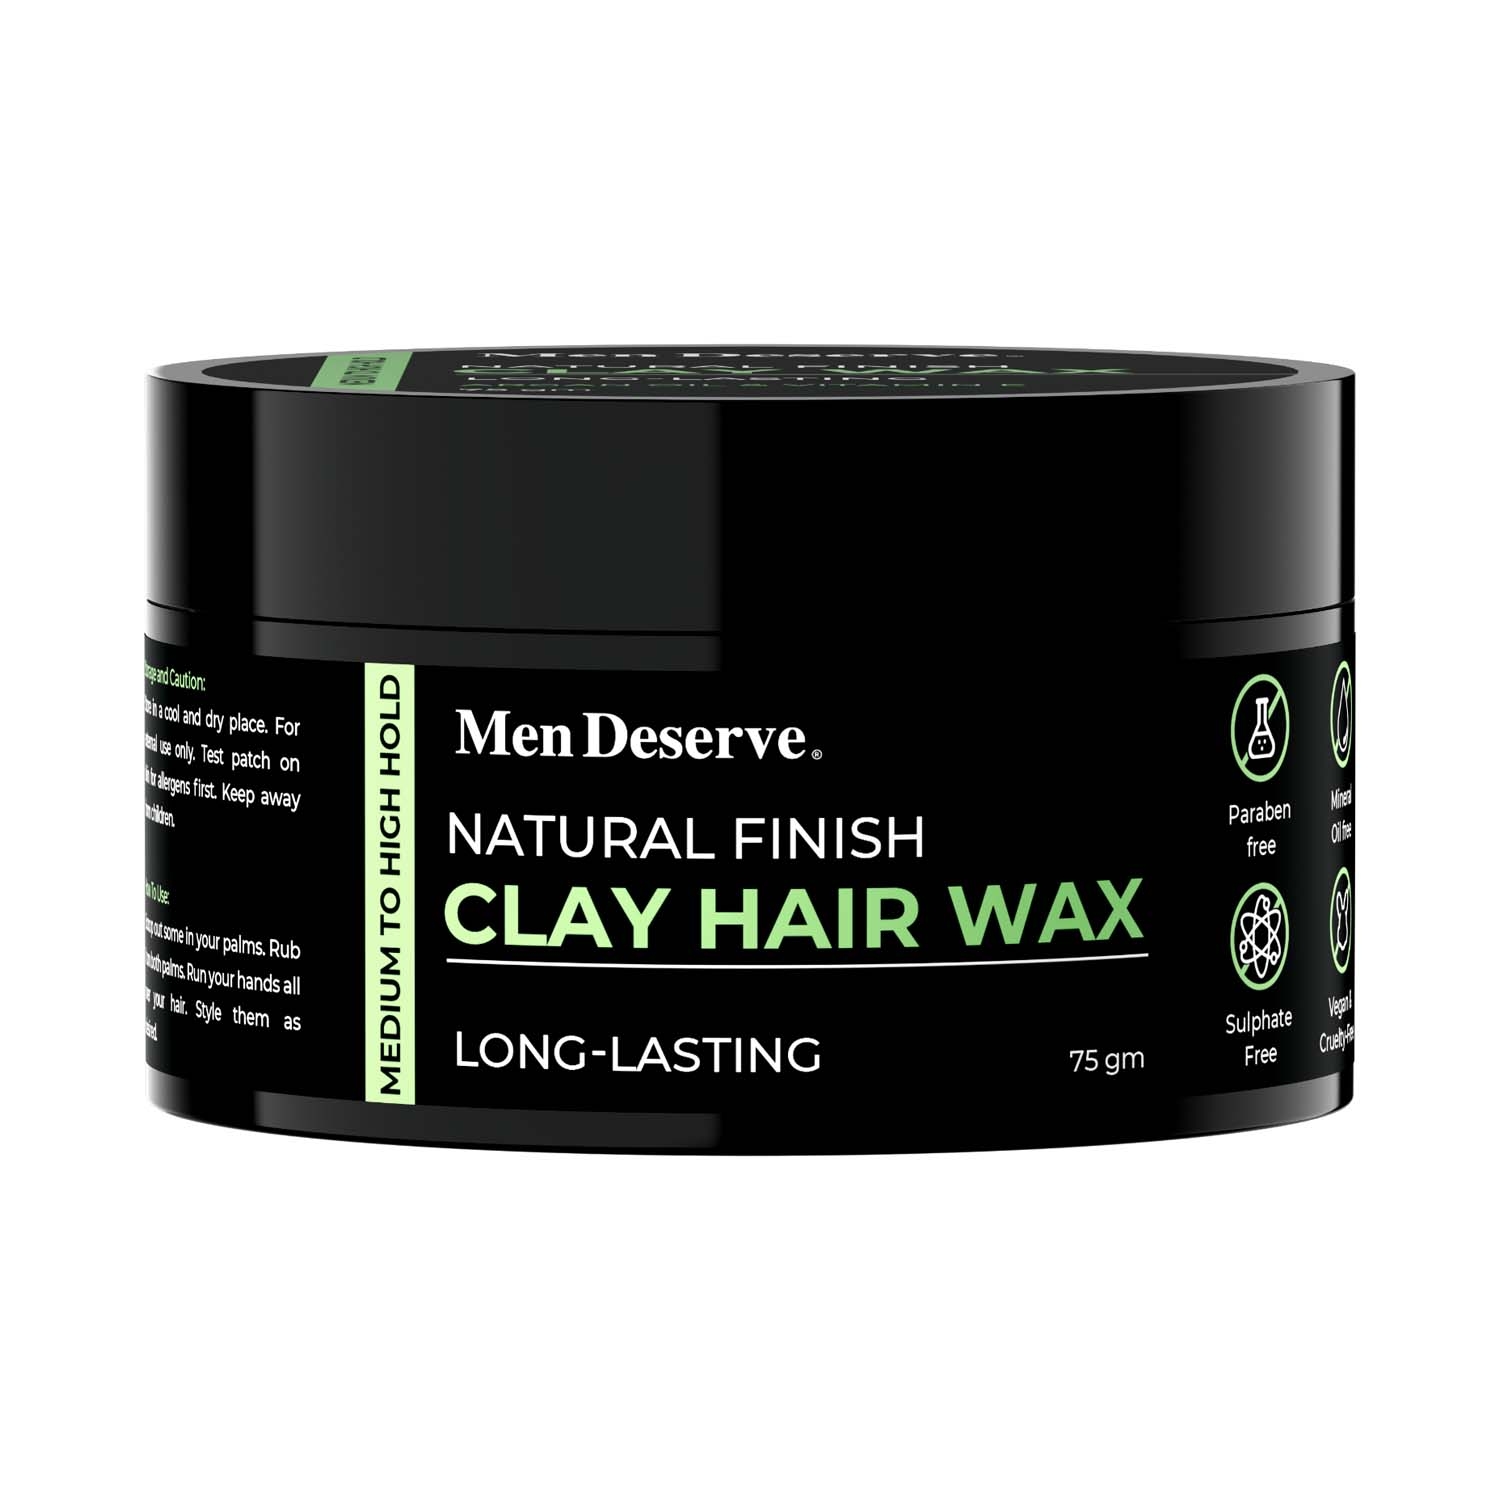 Men Deserve | Men Deserve Hair Clay Wax For Natural Hair Styling (75g)